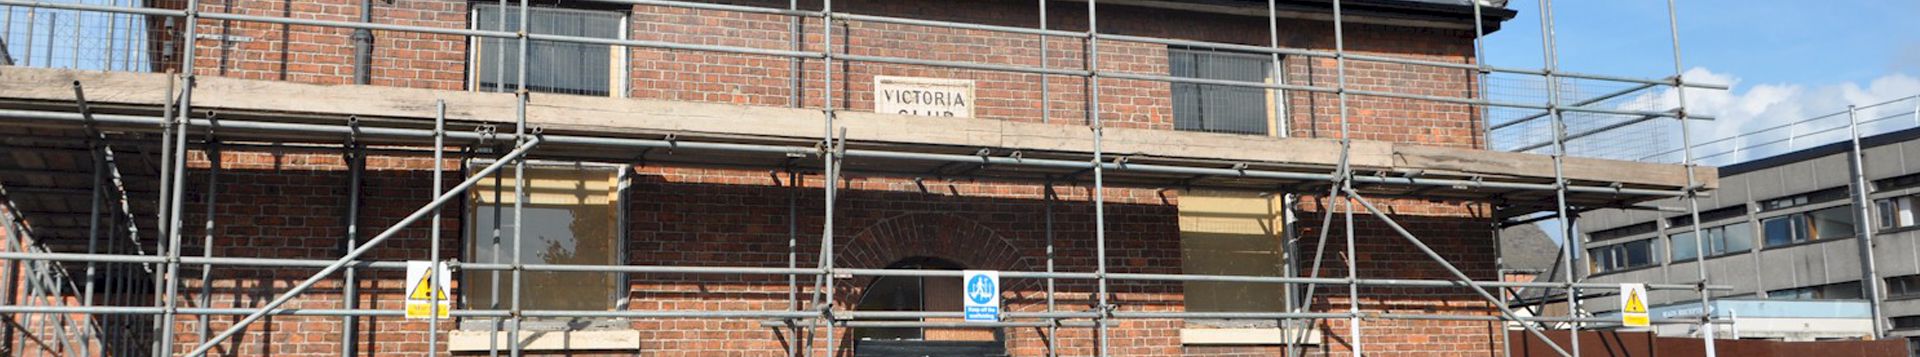 Restoration of the Victoria Club